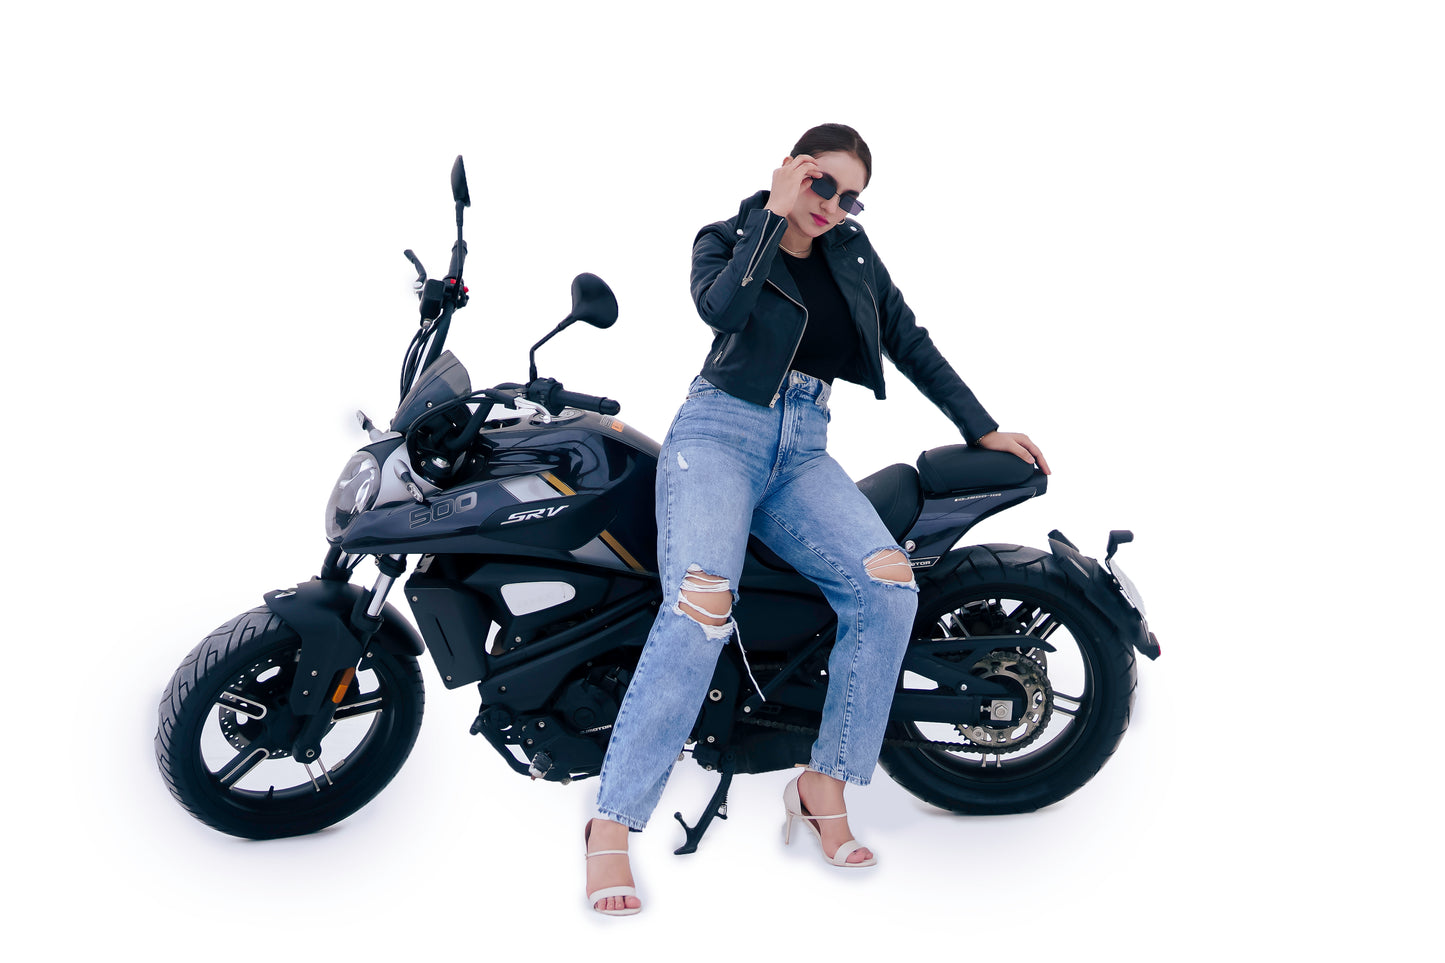 New Women Black Slim Fit Biker Style Moto Genuine Leather Jacket